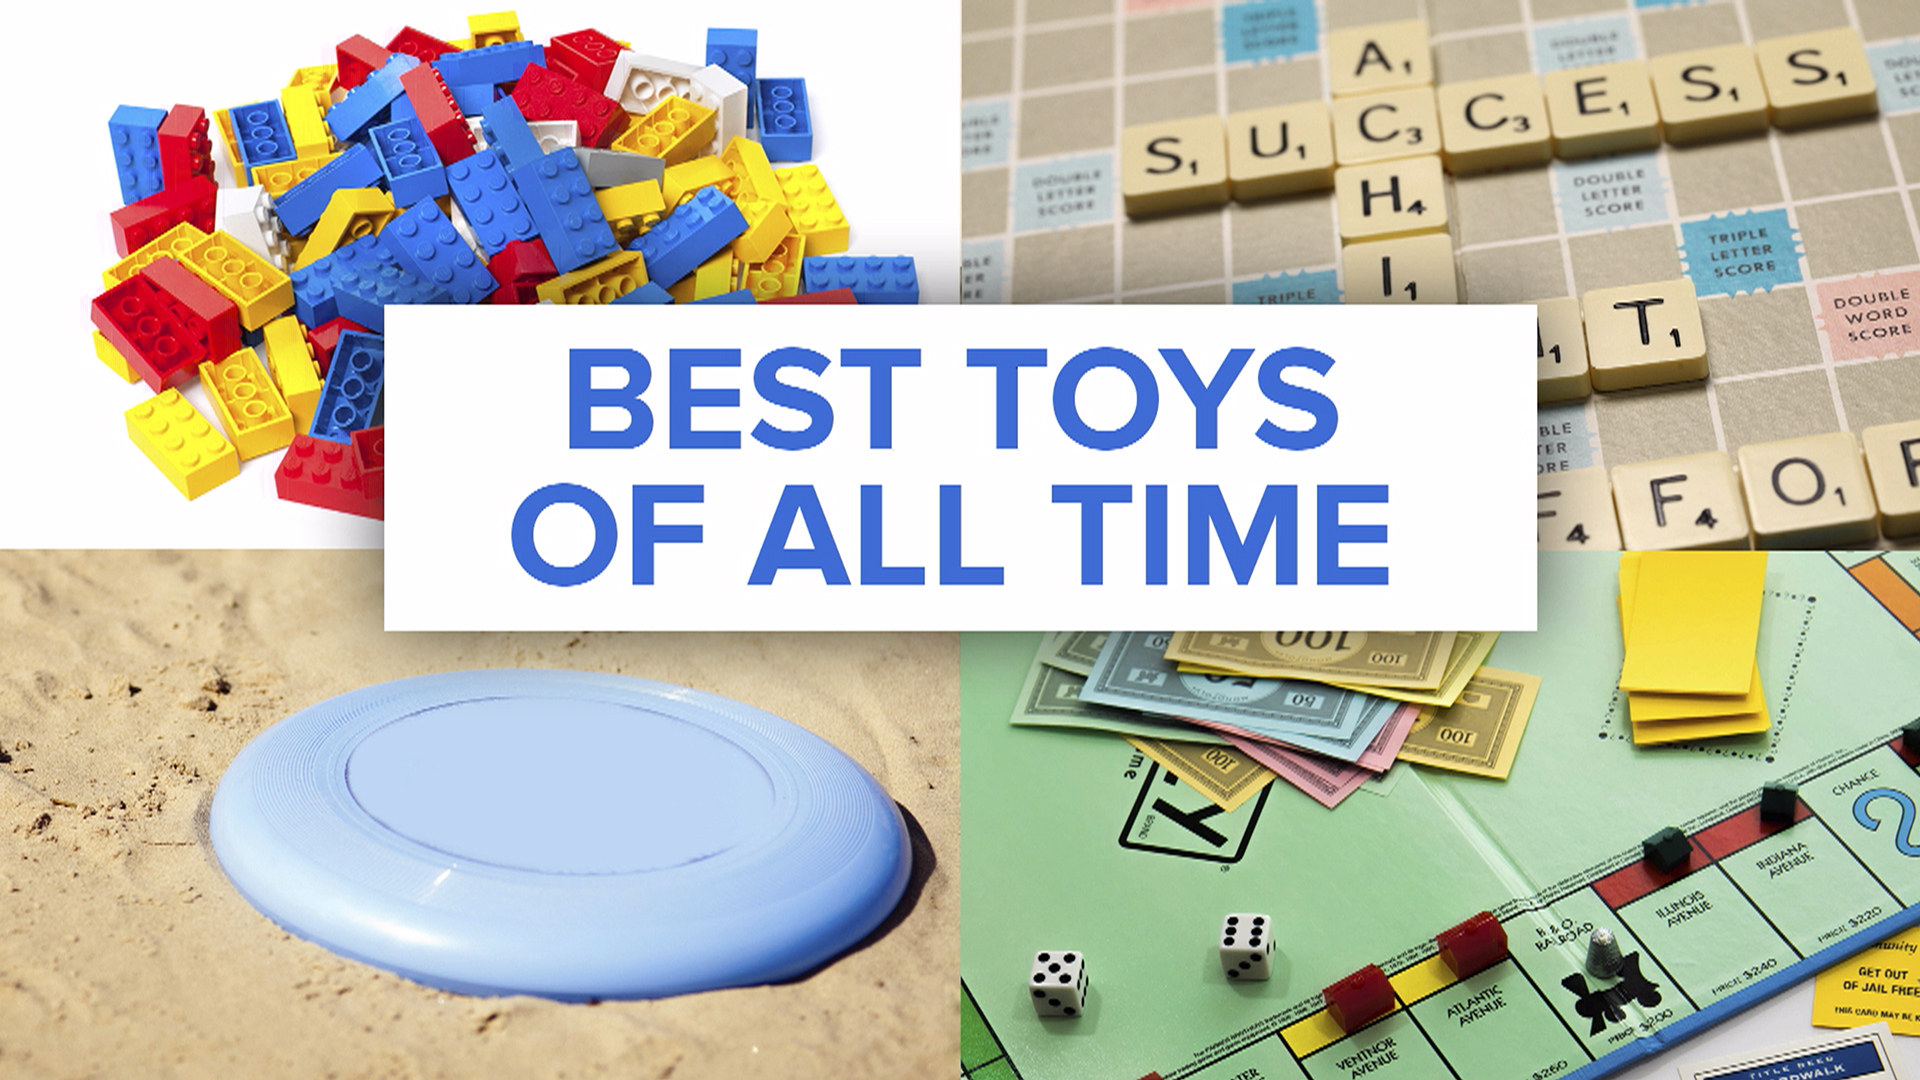 Best toys ever: Lego, Scrabble… cardboard box?